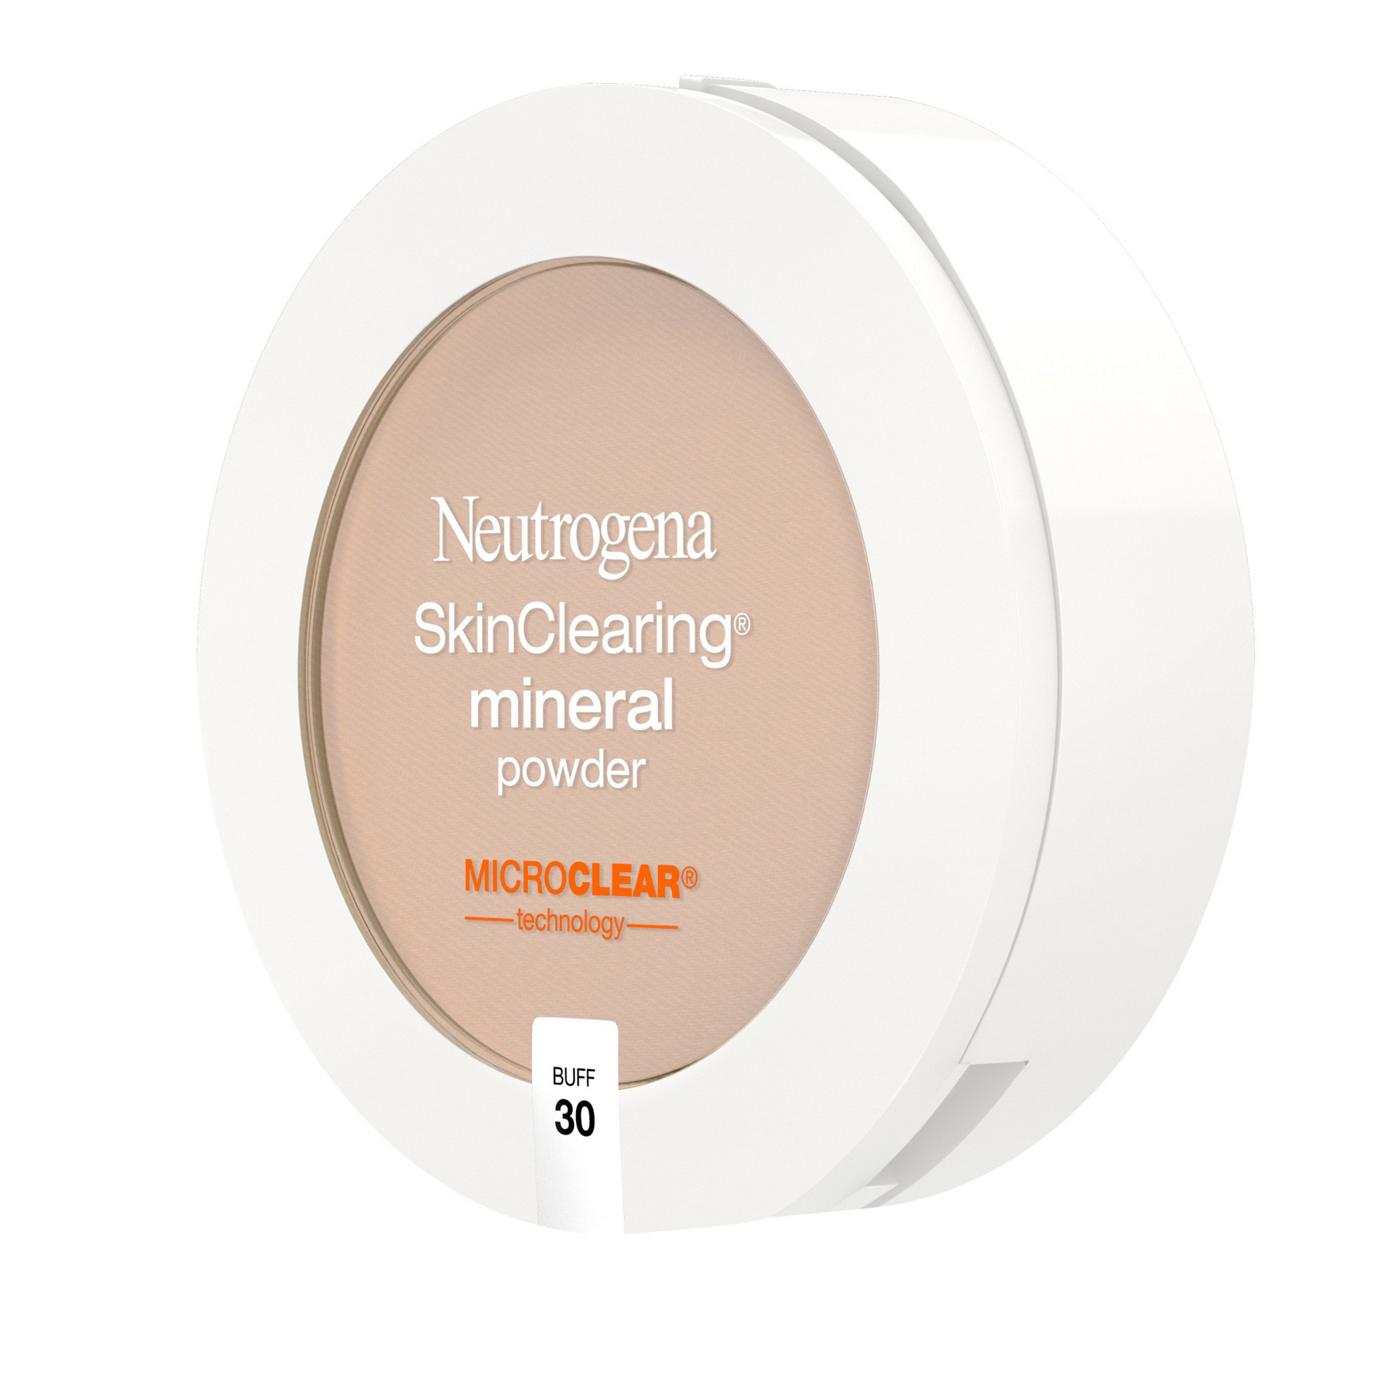 Neutrogena Skinclearing Mineral Powder 30 Buff; image 3 of 5